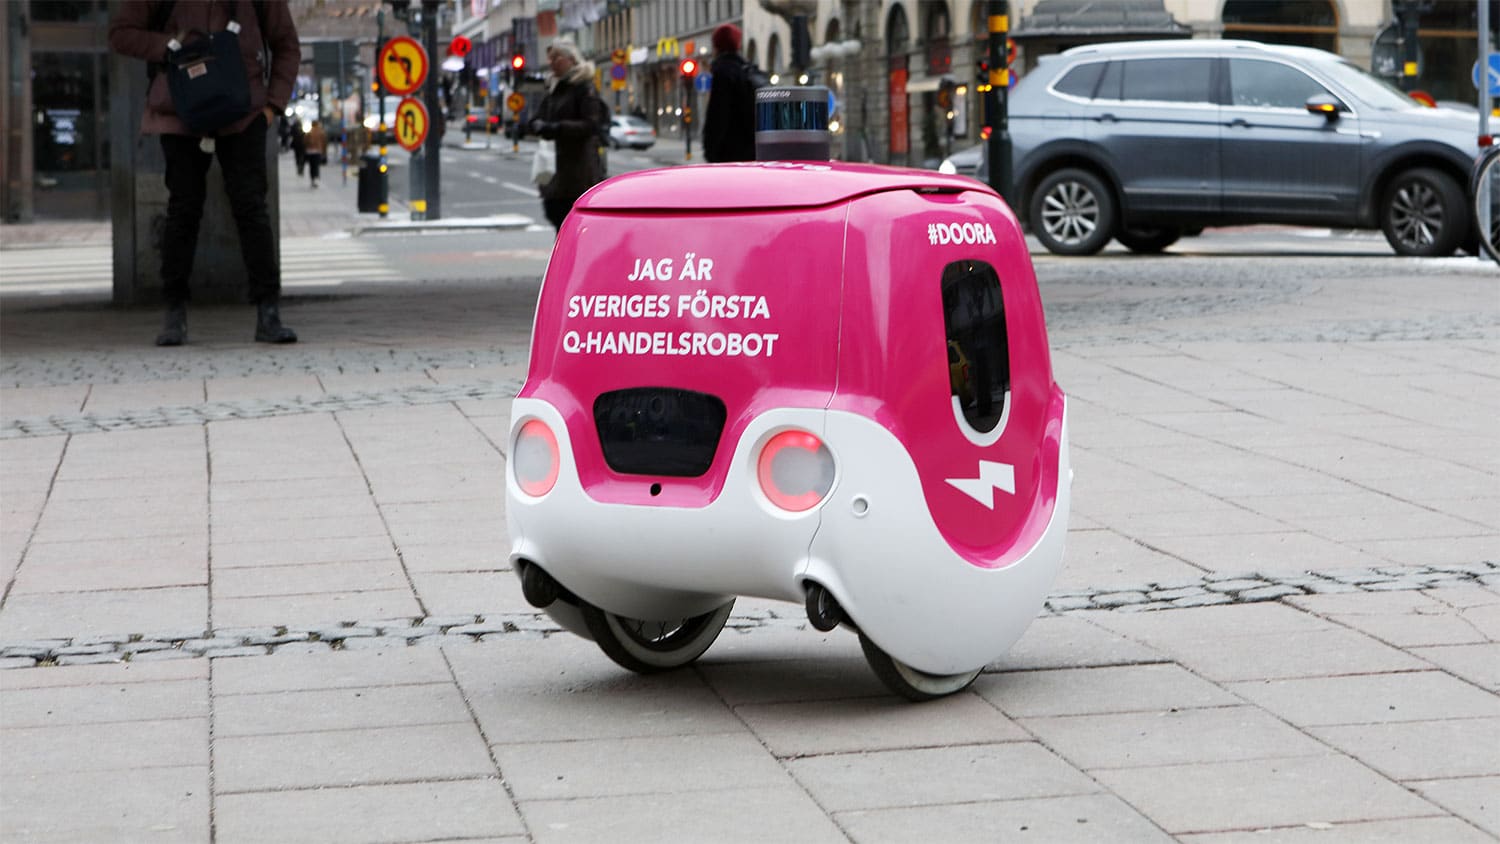 Foodora's 5G delivery droid Doora to begin making food deliveries in Stockholm. Credit: Foodora